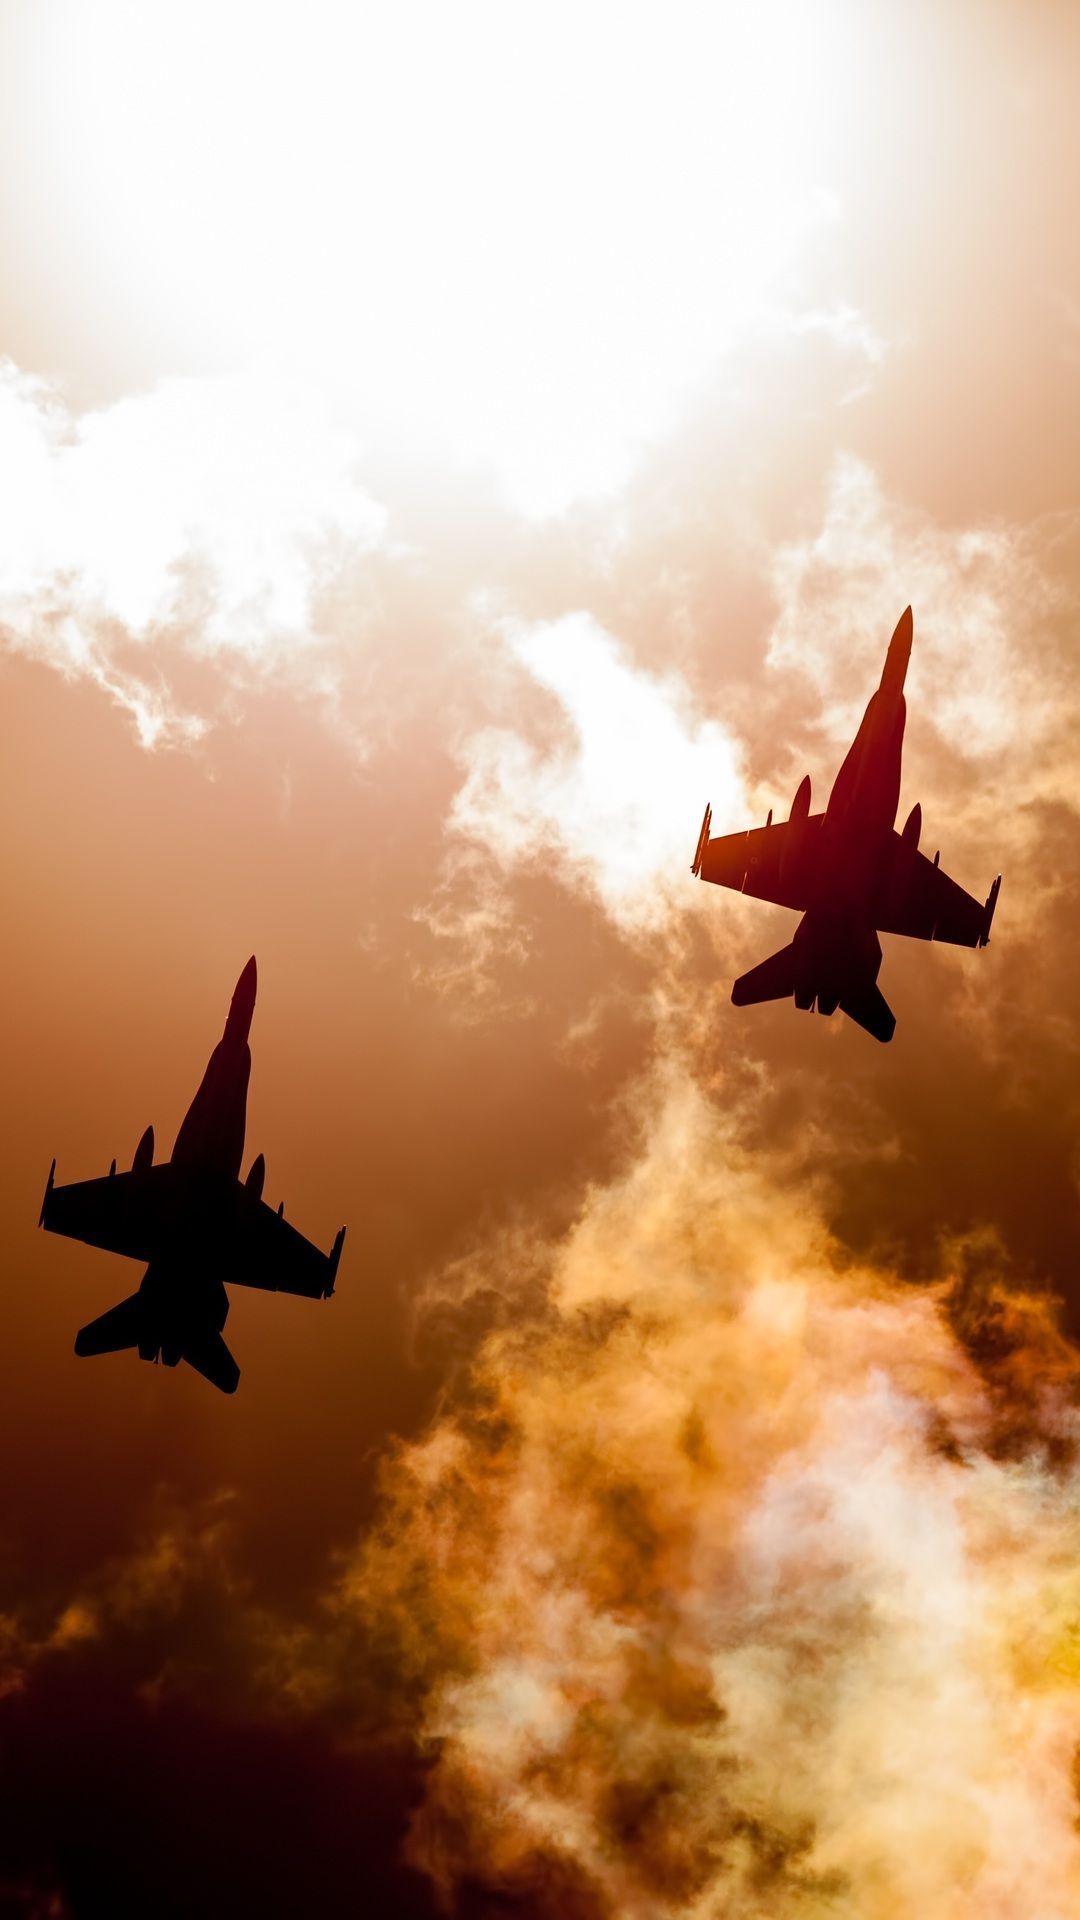 Jet Fighters. Jet fighter pilot, Fighter jets, Air force wallpaper